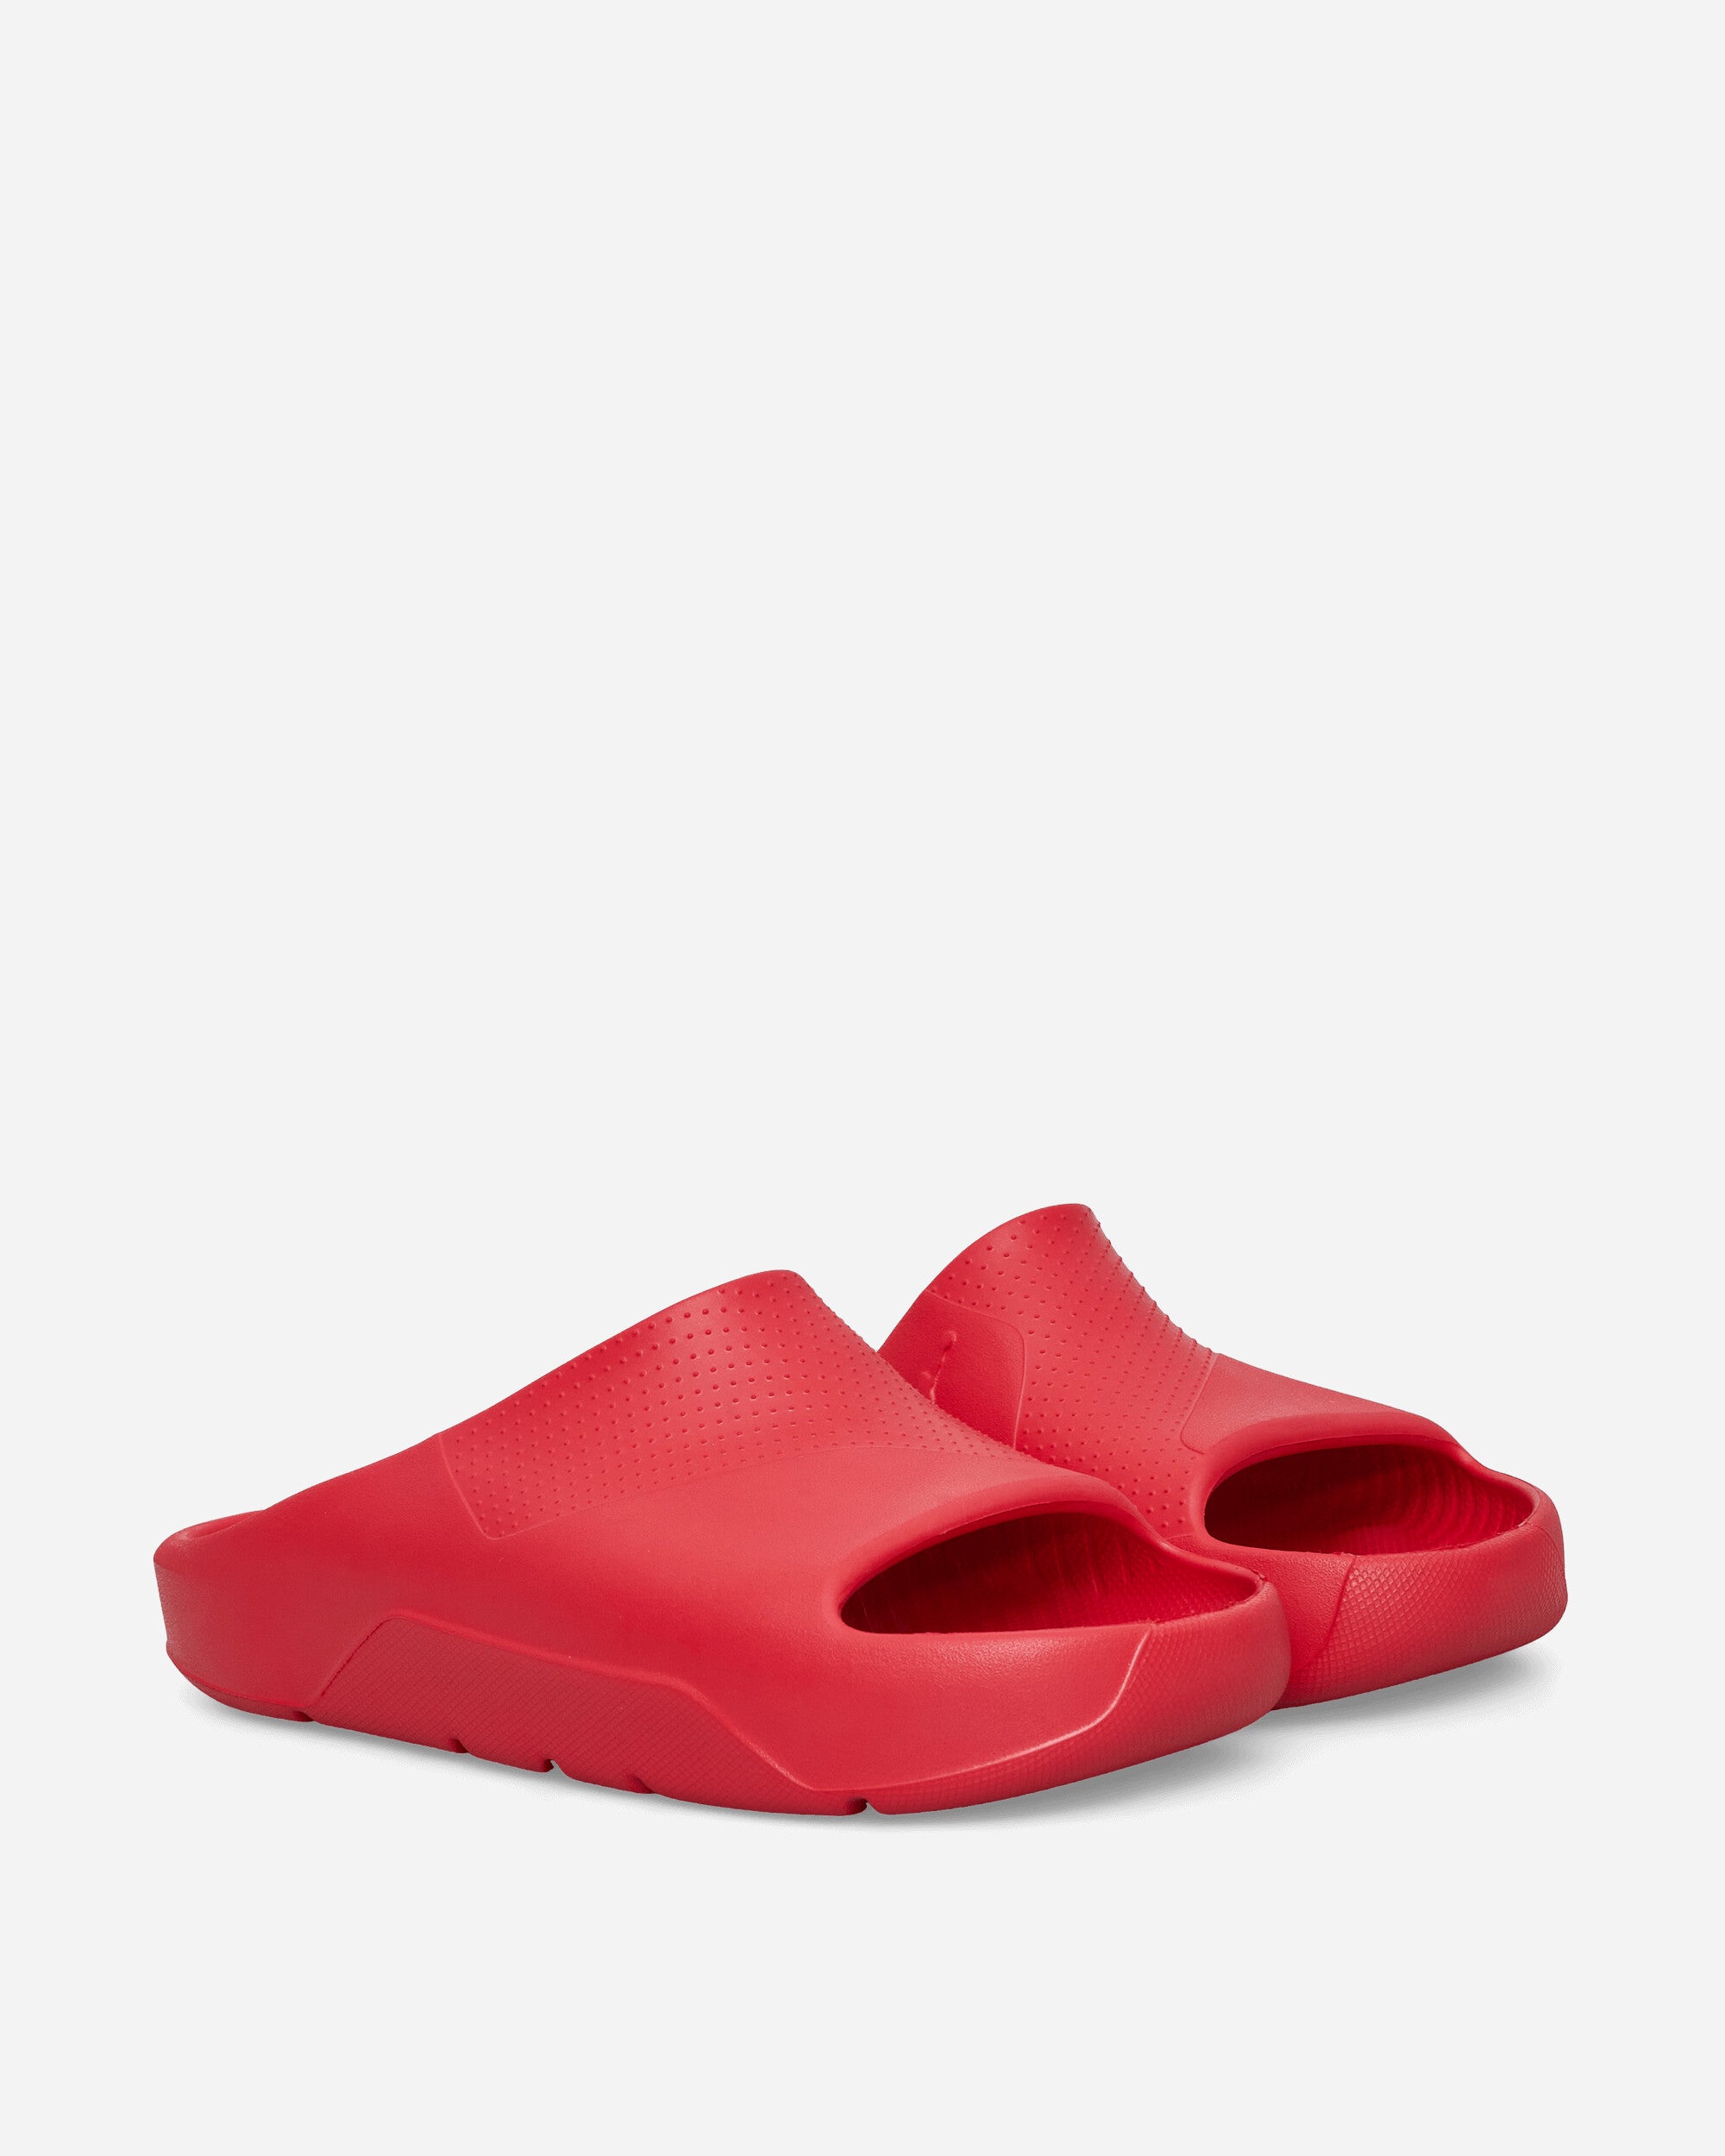 Nike Jordan Jordan Post Slide University Red/University Red Sneakers Low DX5575-600